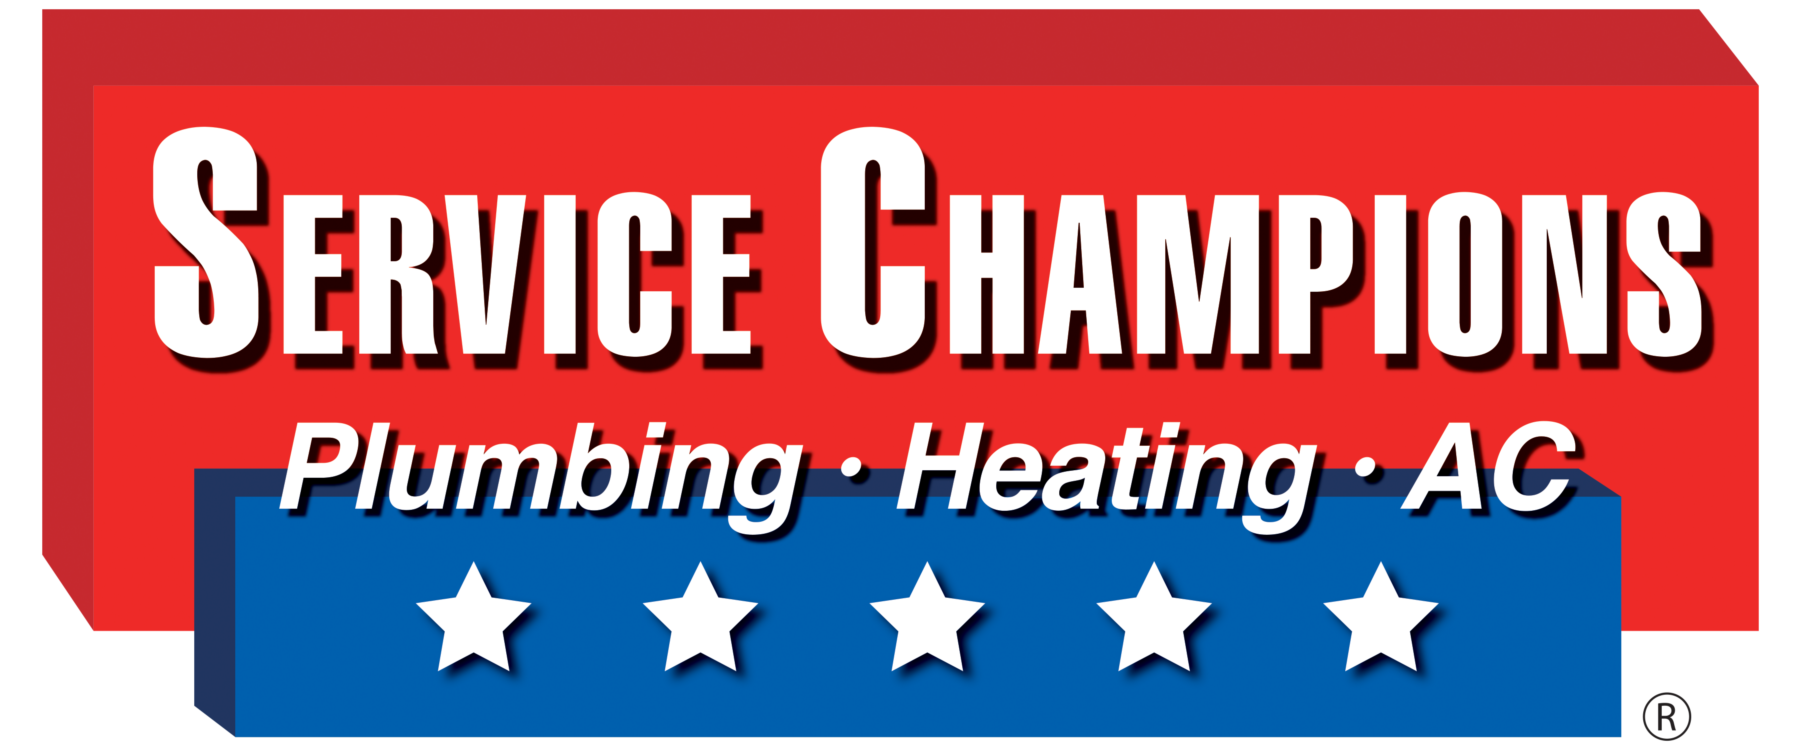 Service Champions Plumbing, Heating & AC logo